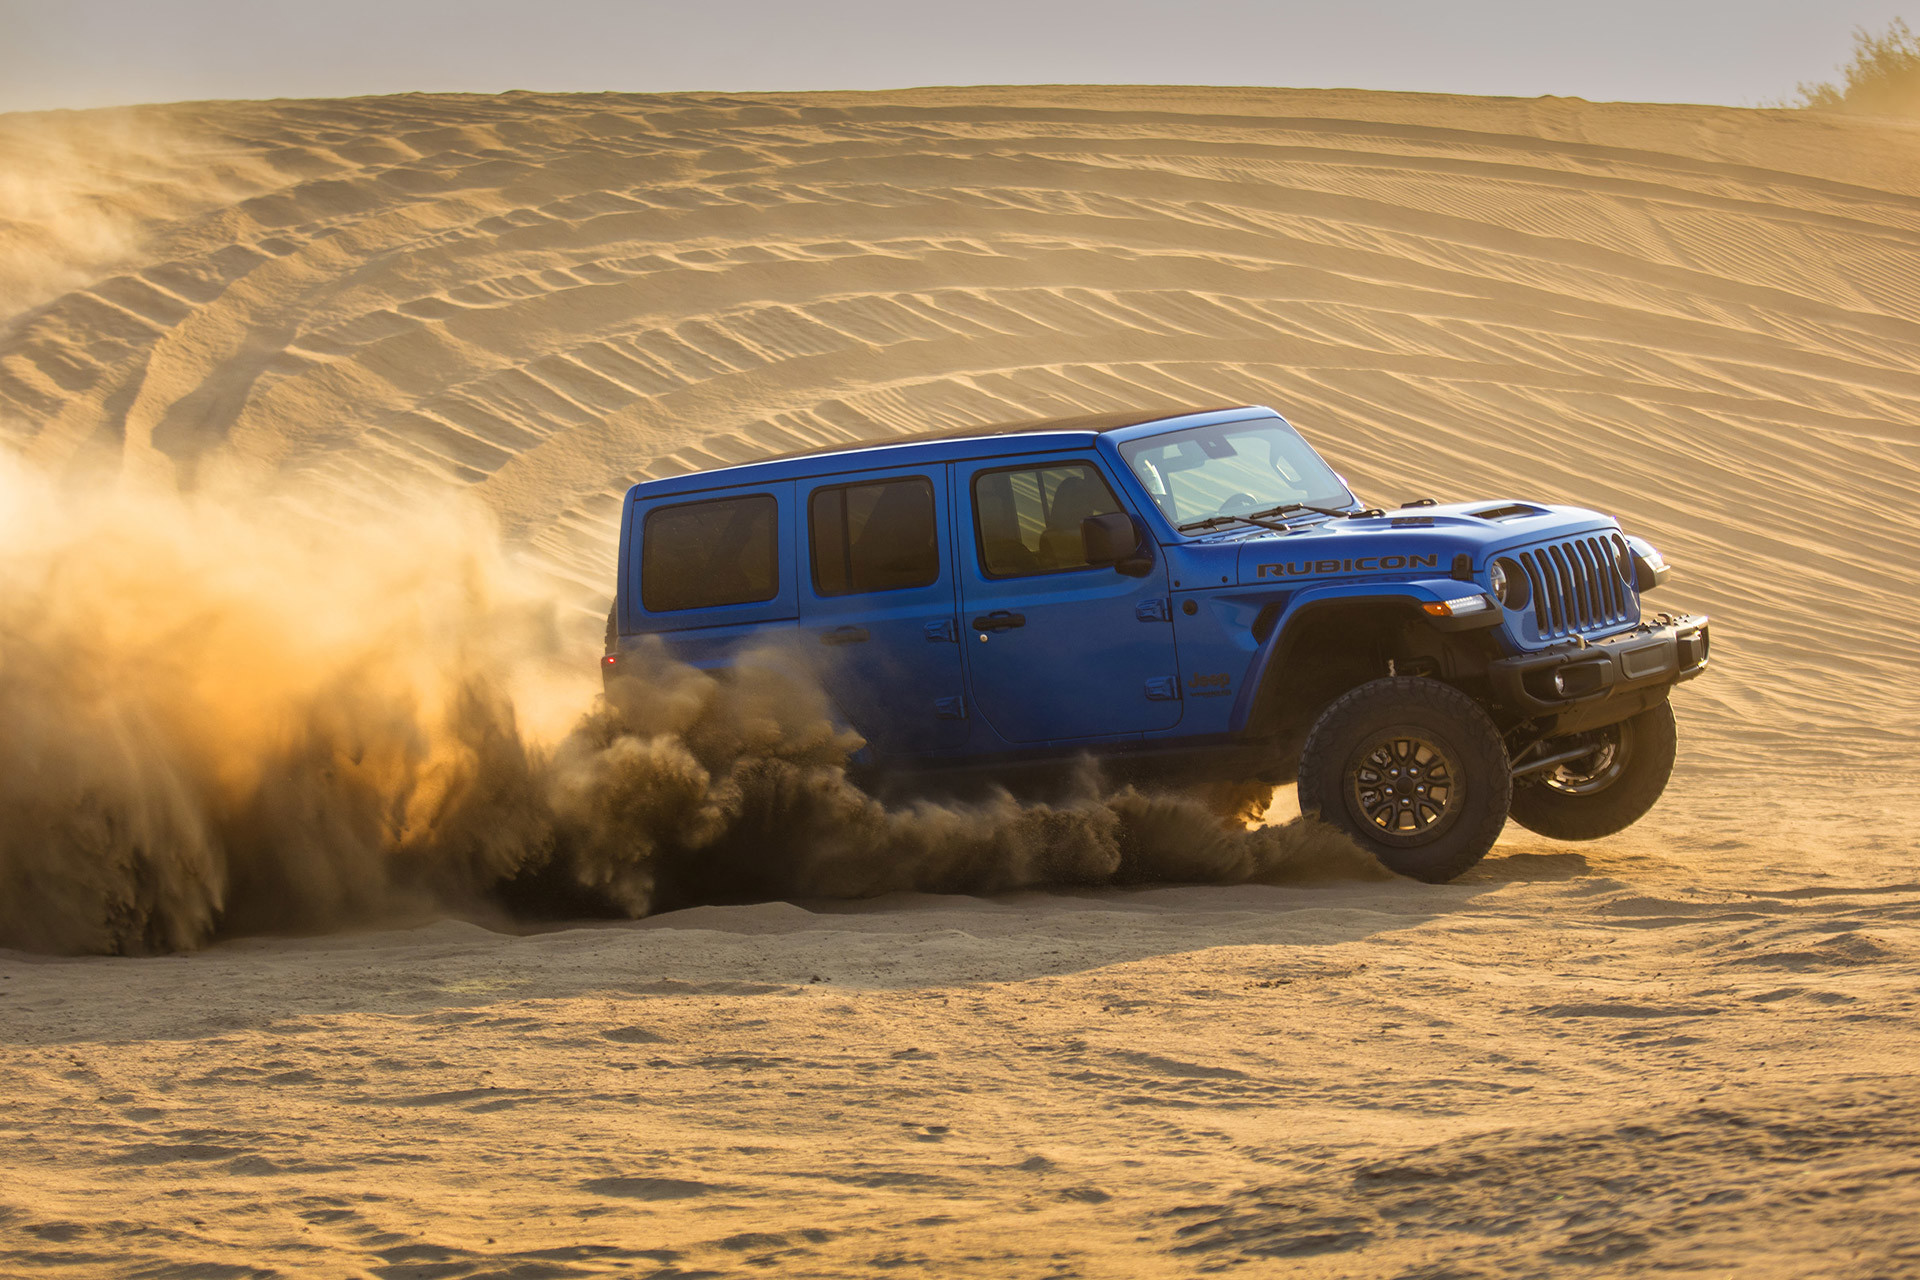 Blue Jeep Wrangler Rubicon 392 drifting through the sand